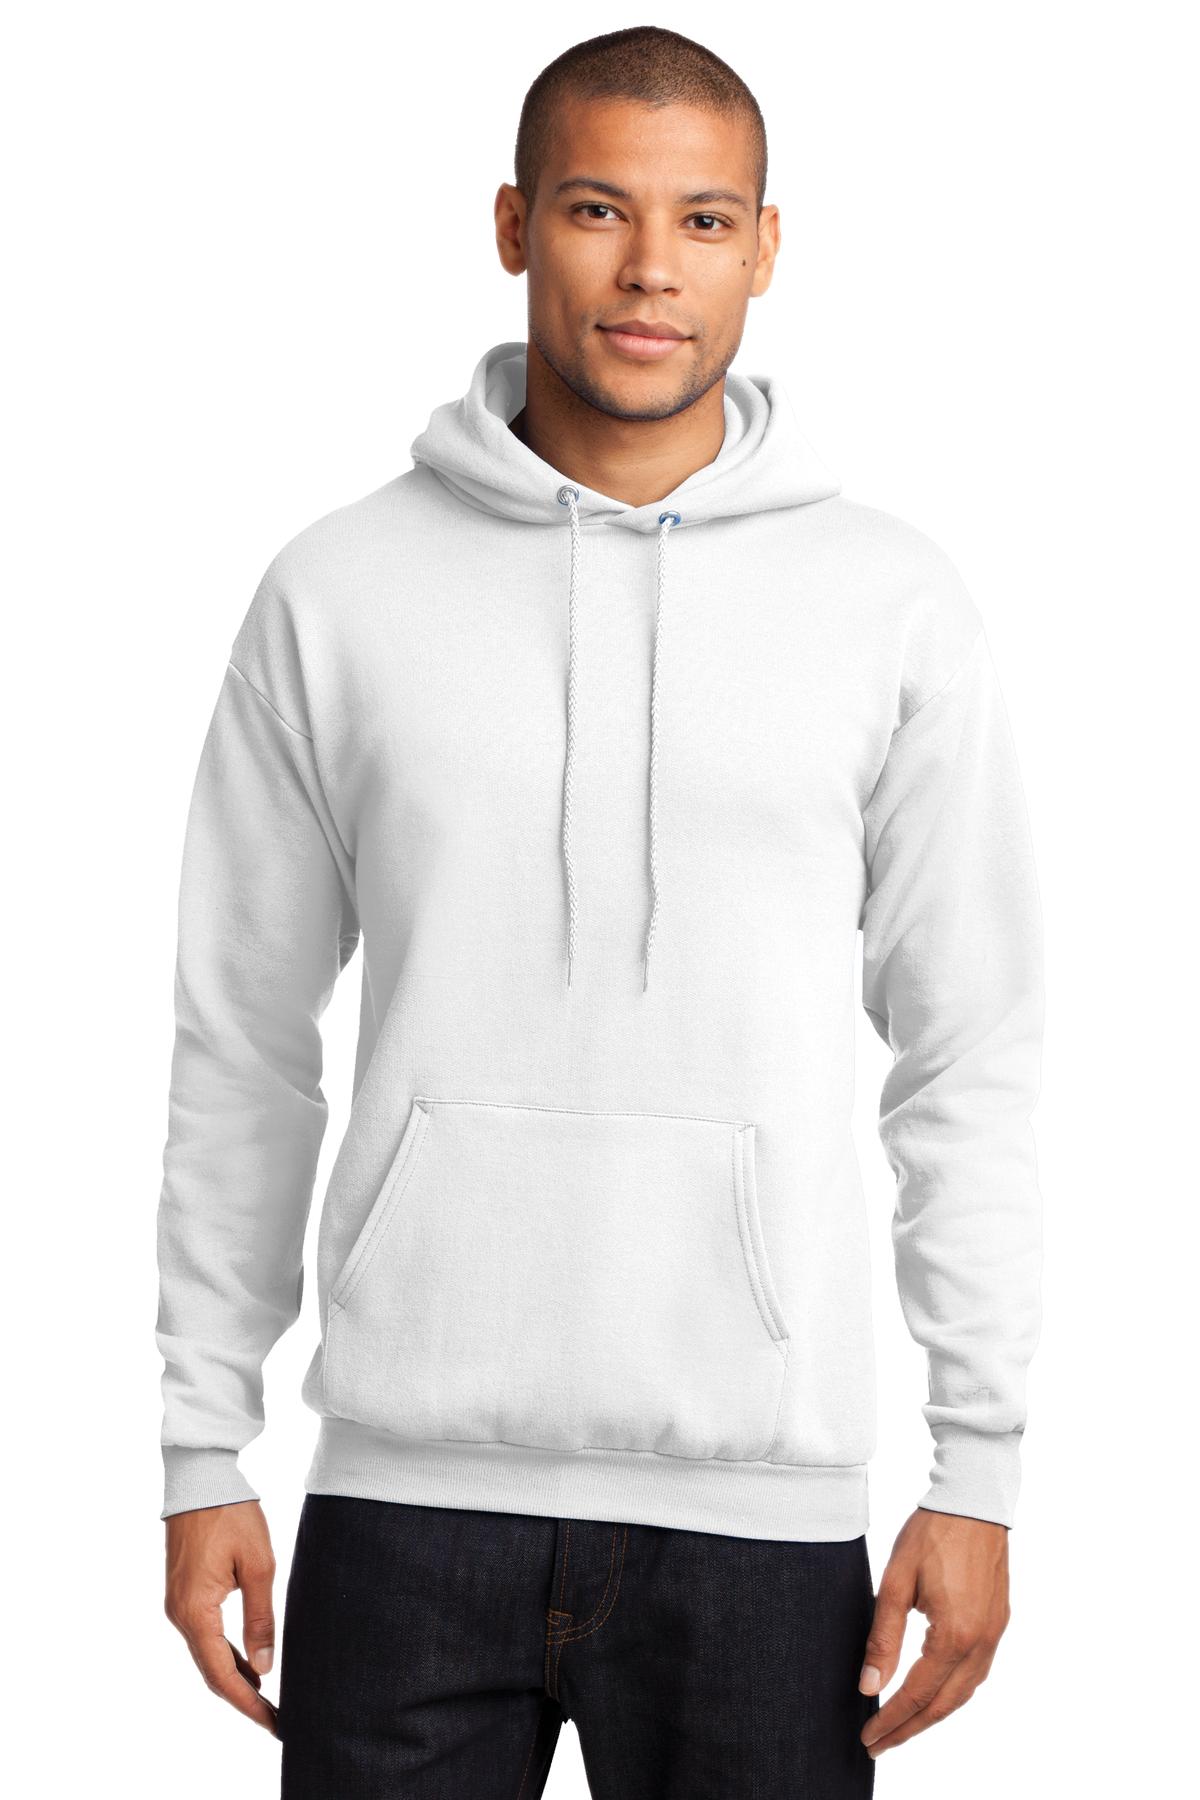 Port & Company® - Core Fleece Pullover Hooded Sweatshirt. PC78H [White] - DFW Impression